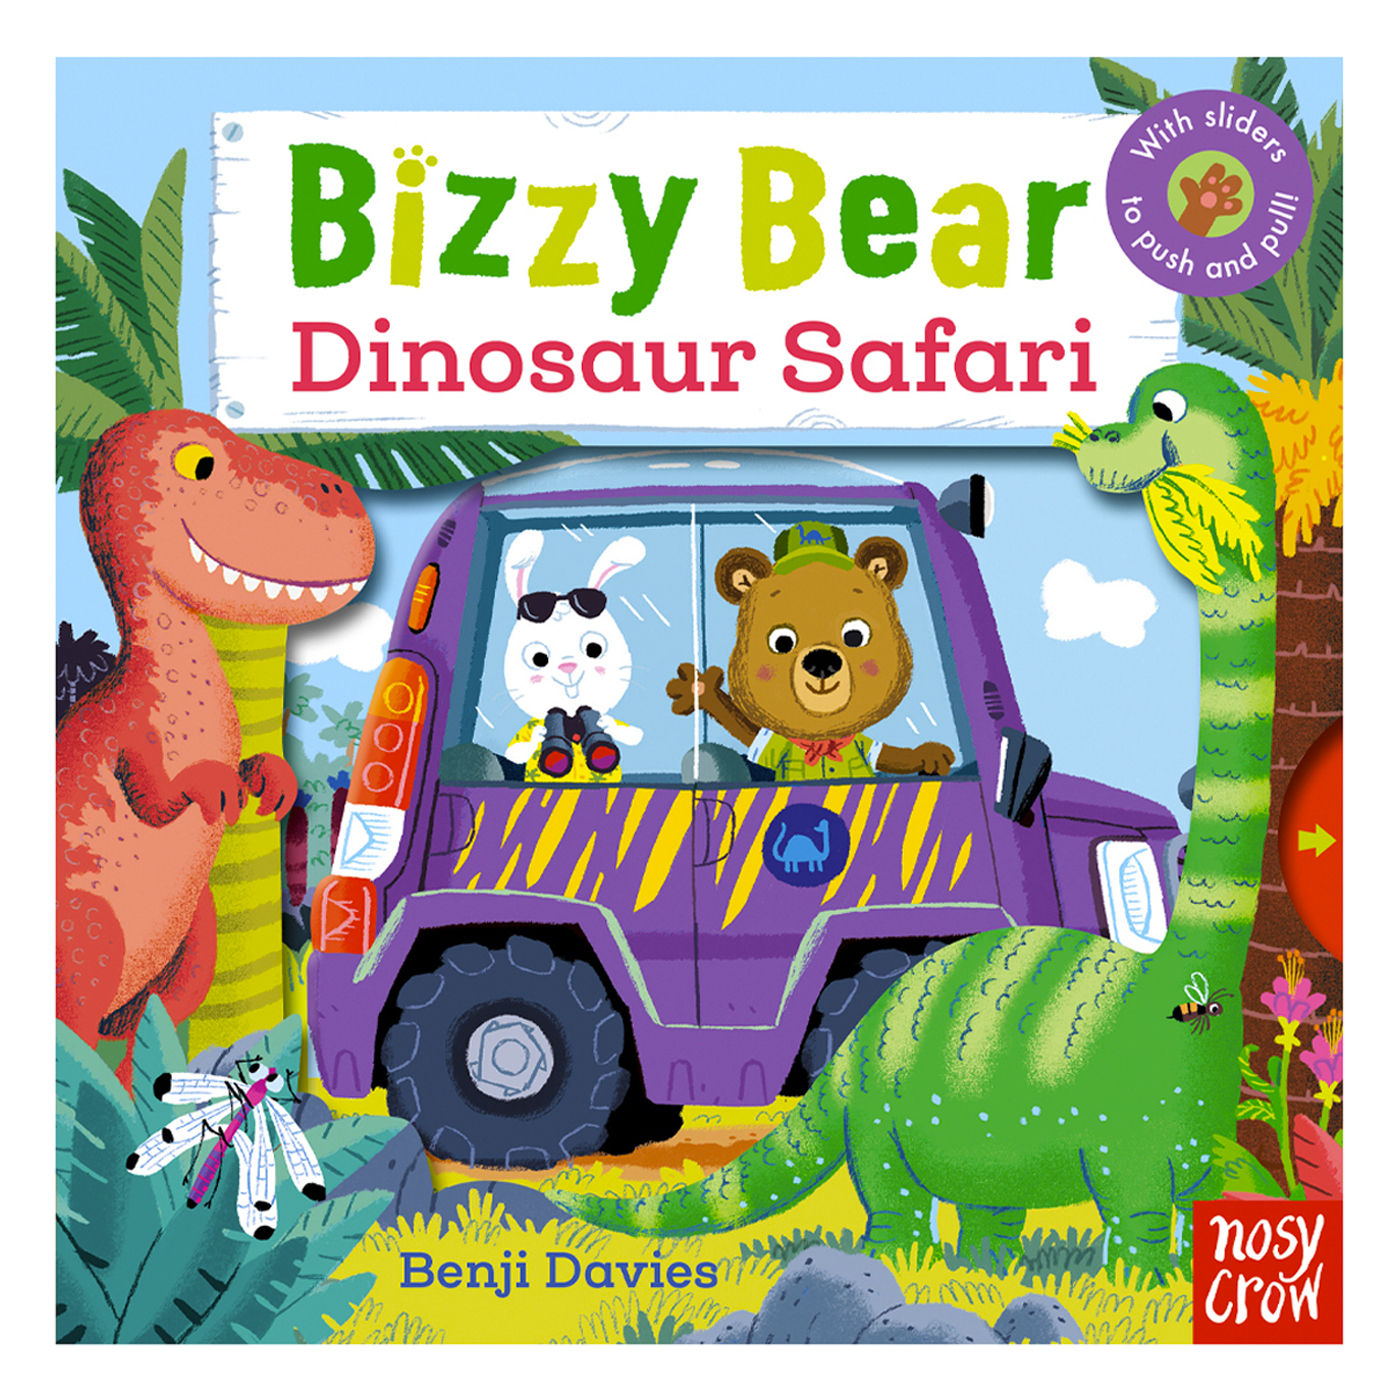  Bizzy Bear: Dinosaur Safari